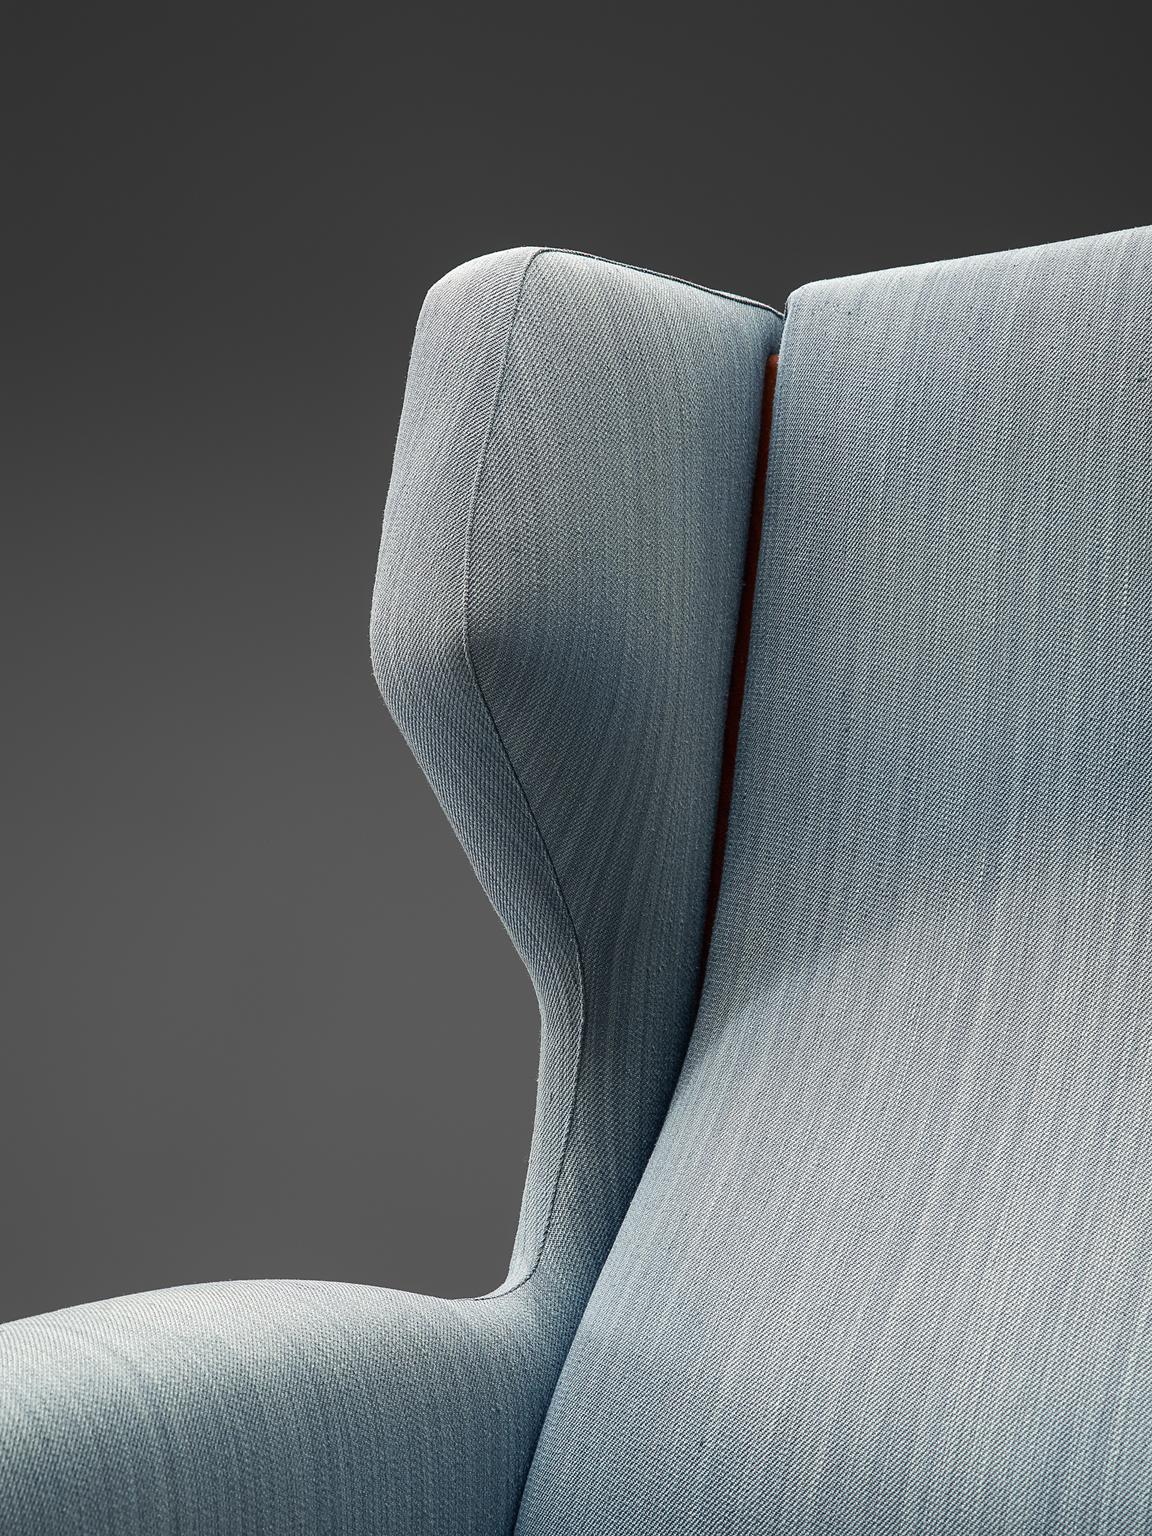 Fabric Gianfranco Frattini Lounge Chair for Cassina